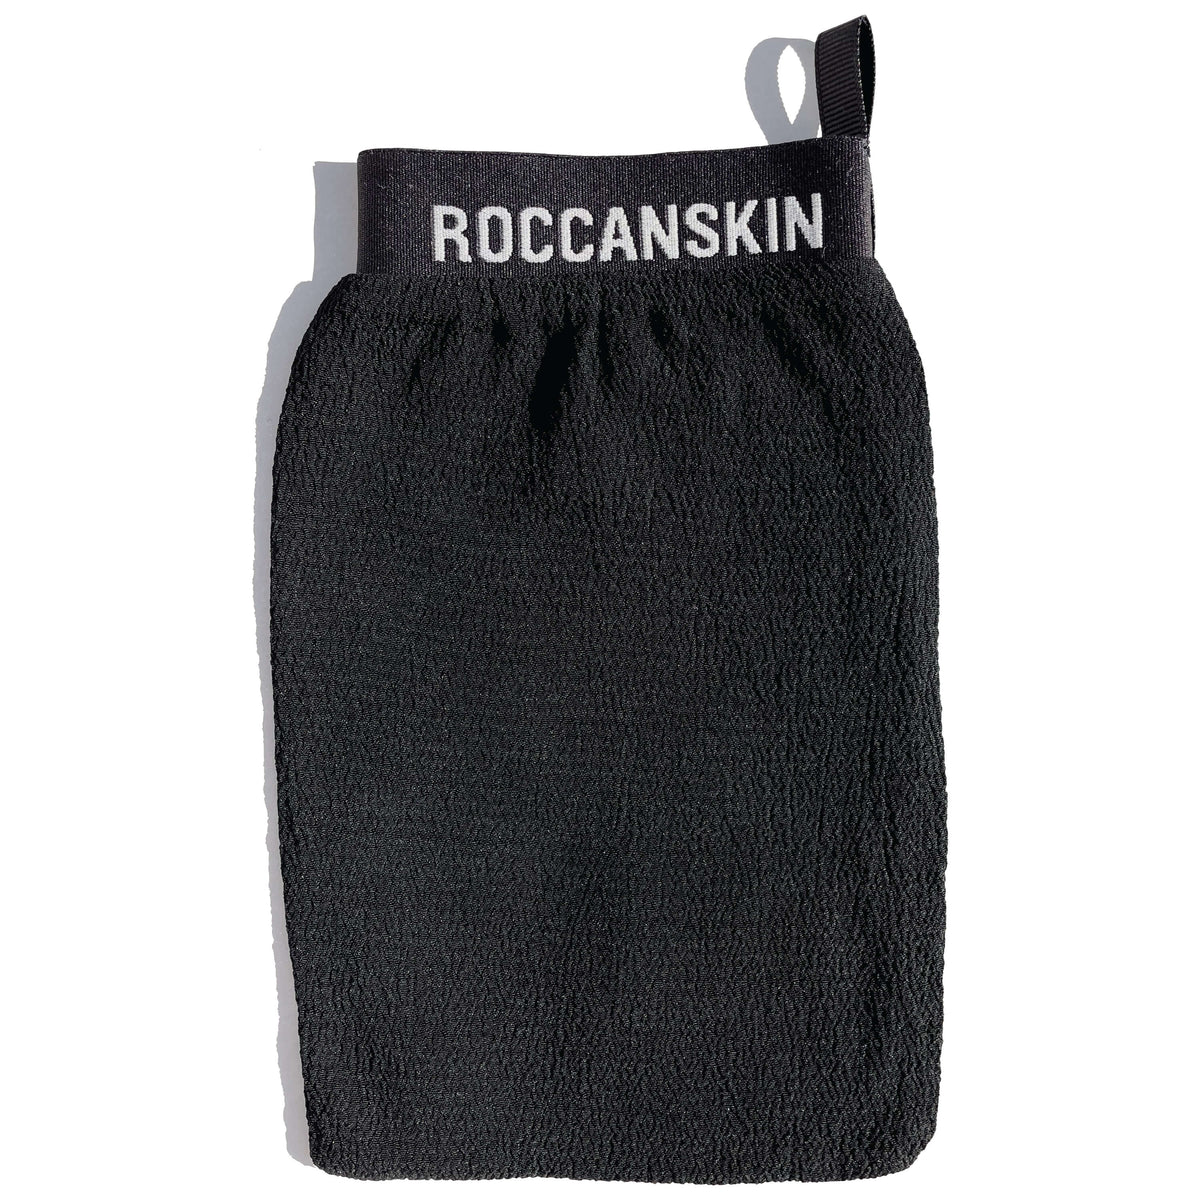 roccanskin.com